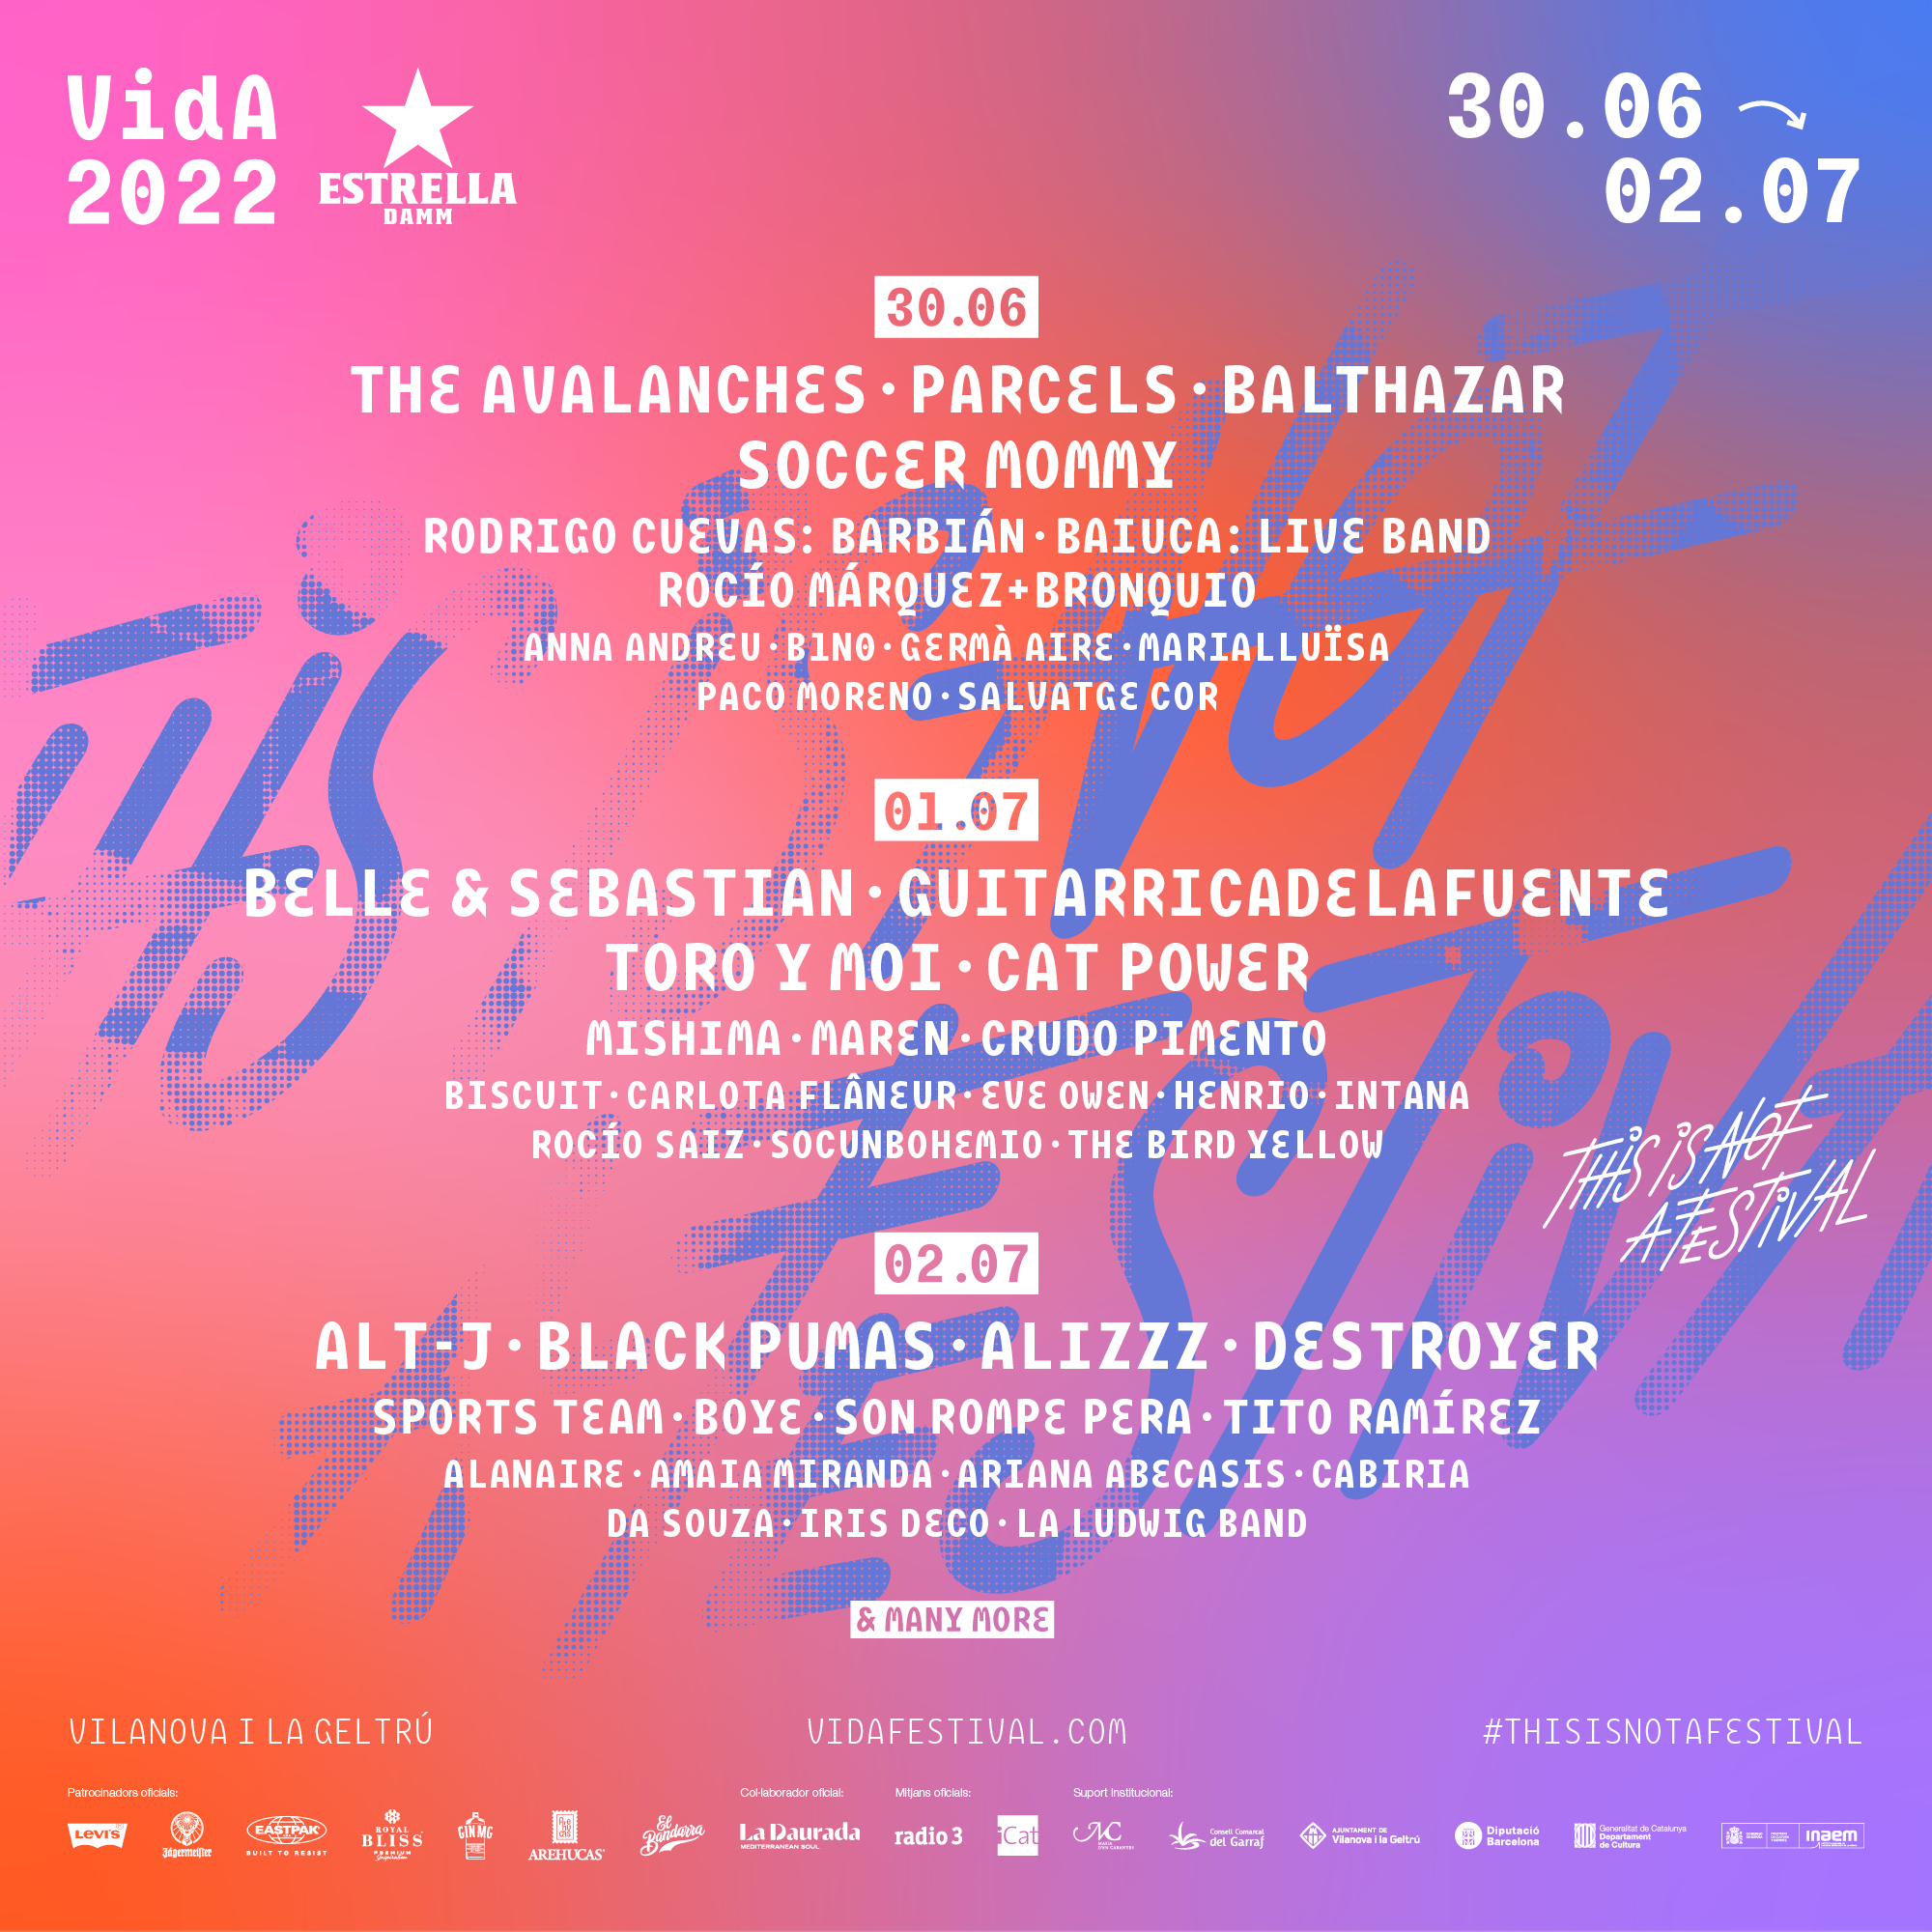 Vida Festival 2015 - 2-5 de julio (Villanova i la geltrú) - Página 2 FFlUScsWUAArw7d?format=jpg&name=large